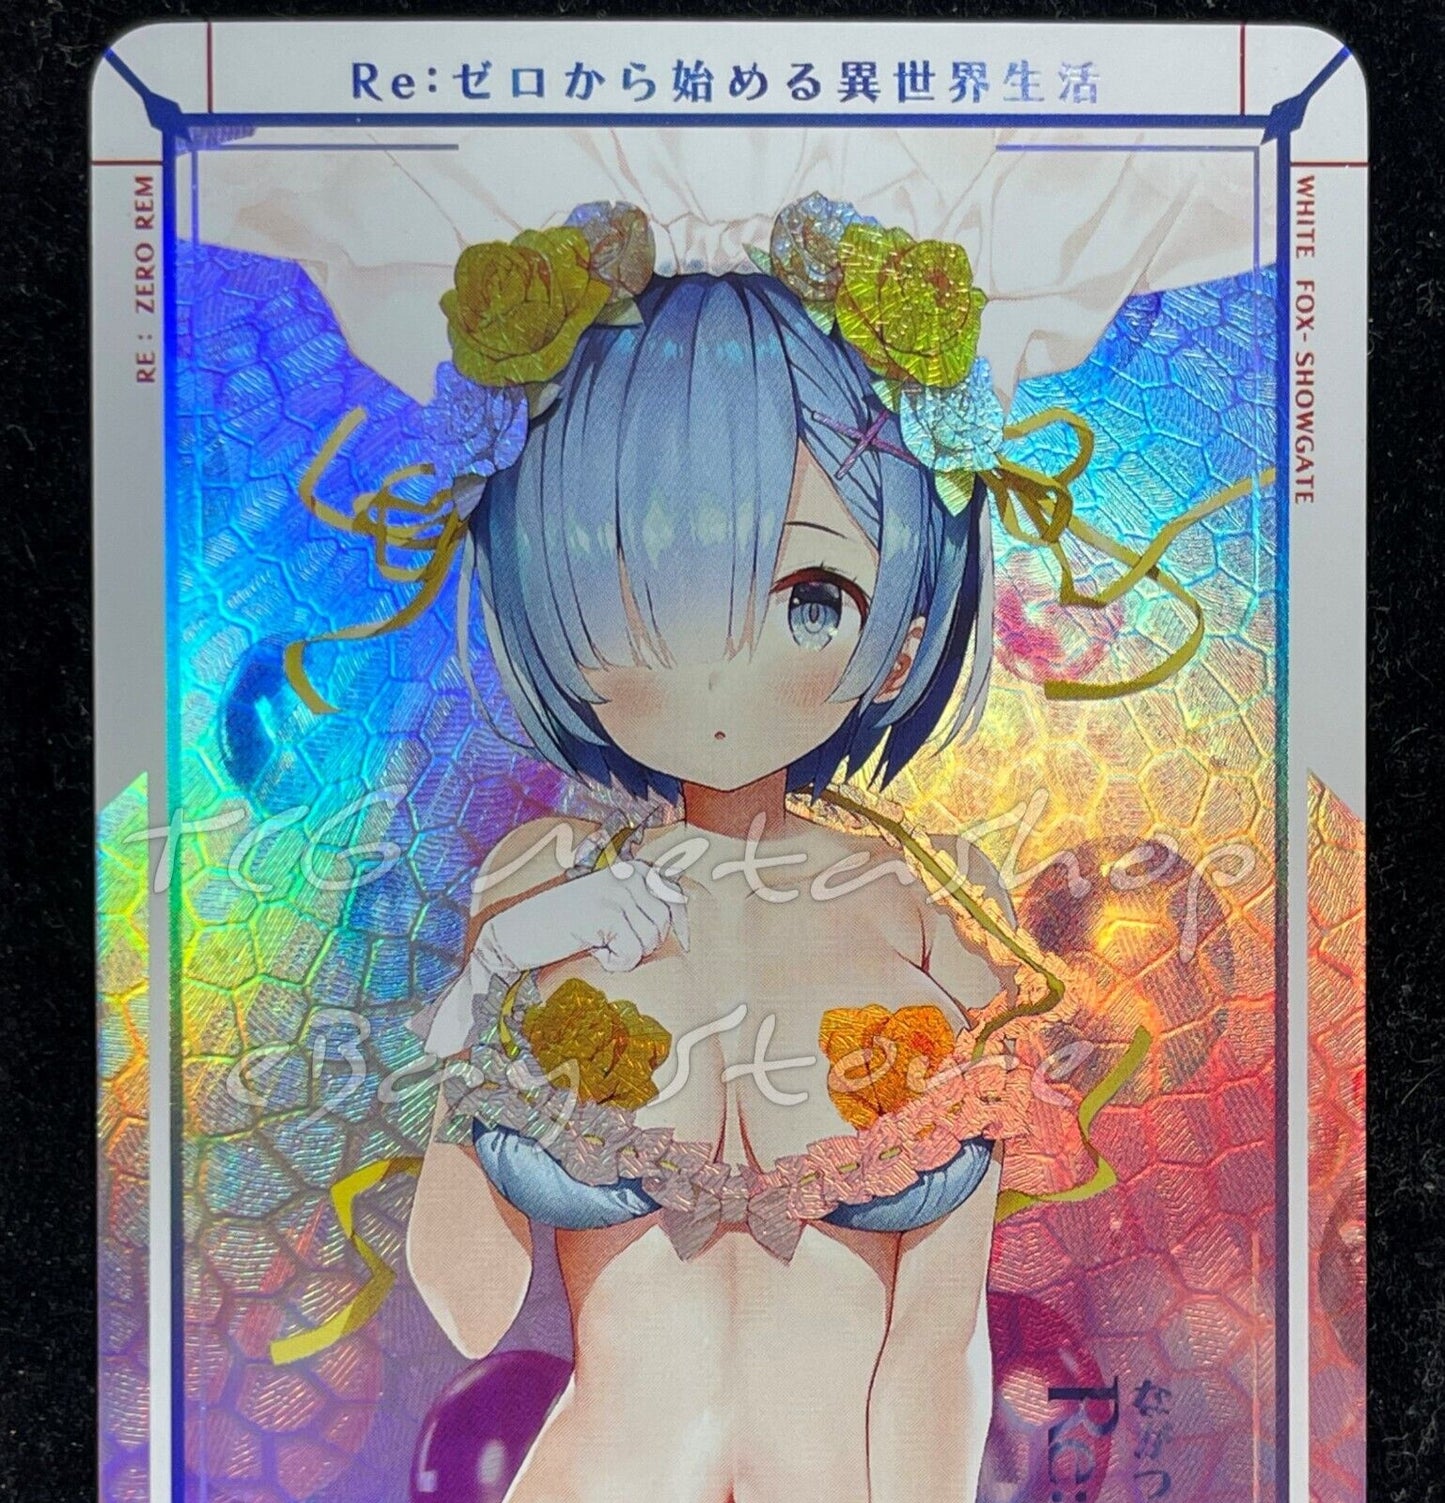 🔥 Rem Re:Zero Goddess Story Anime Card ACG # 934 🔥